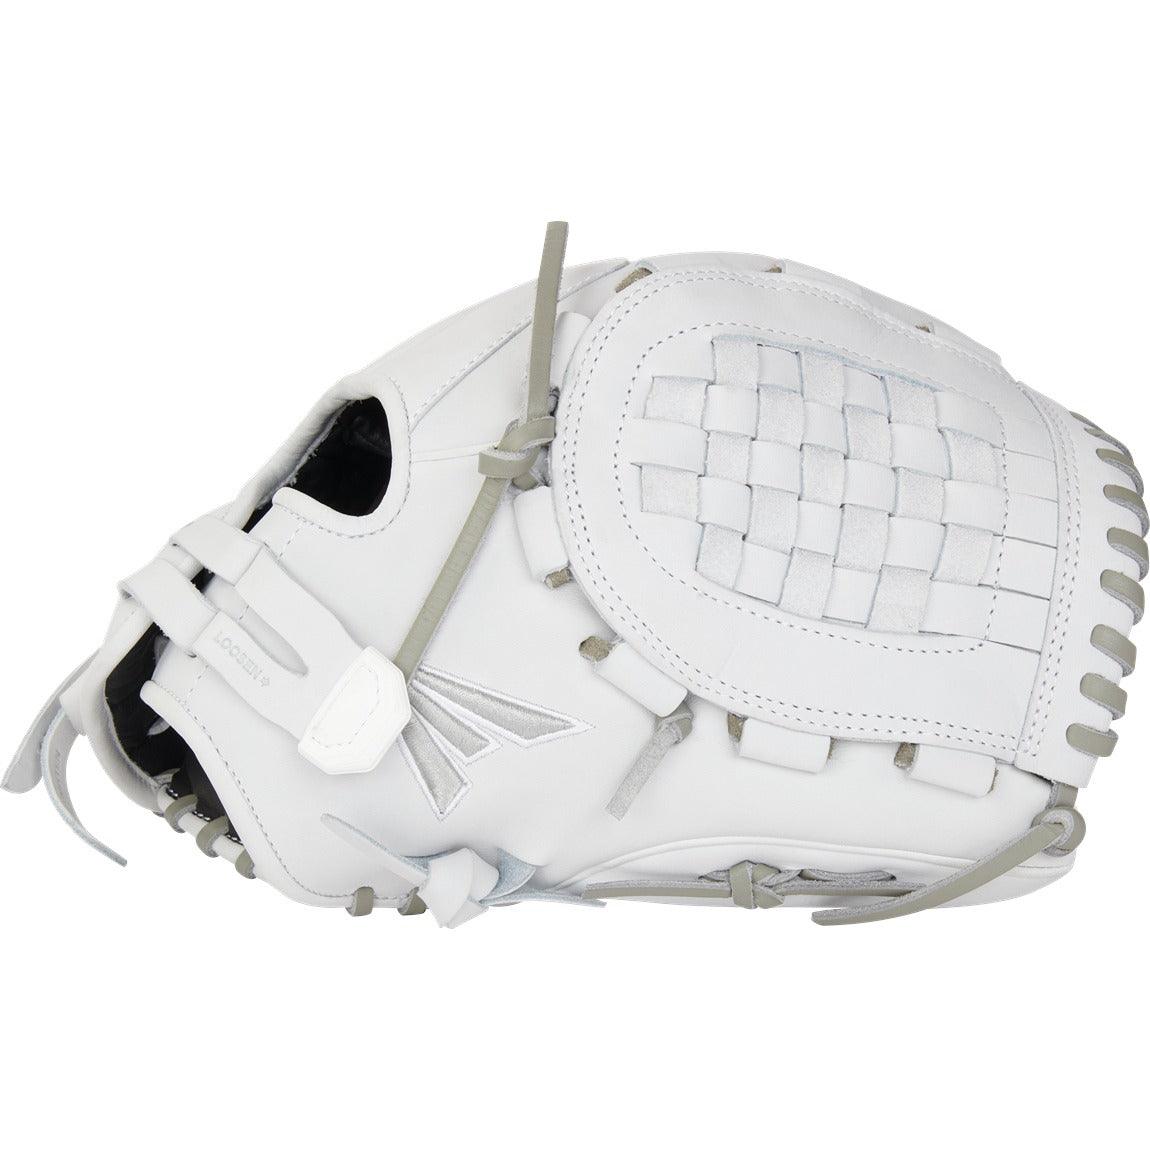 2024 Easton Pro Collection 12.5" Softball Glove